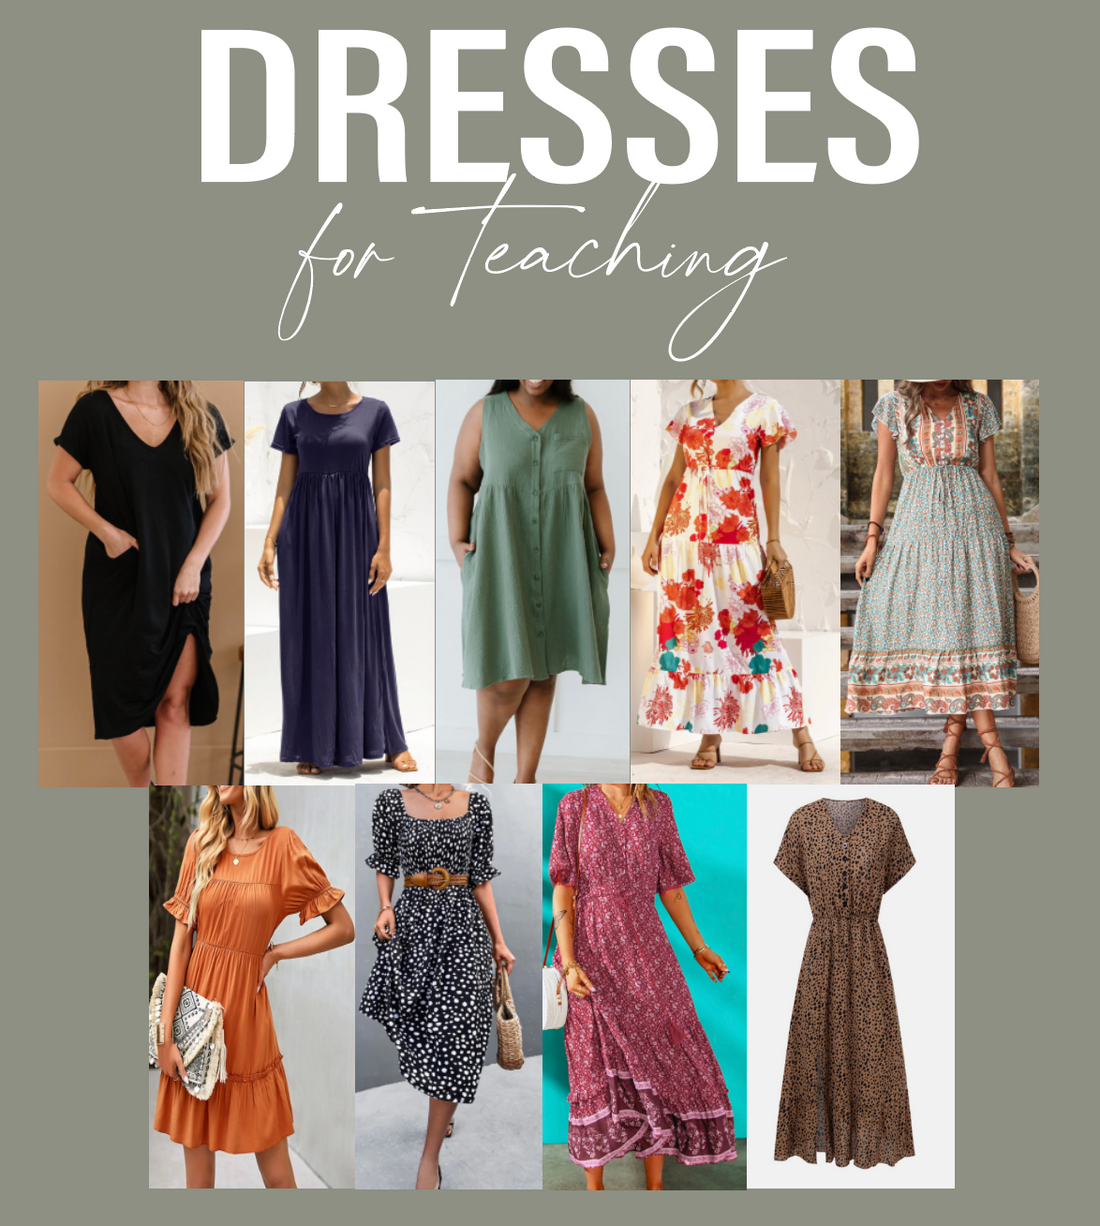 Teacher Dresses